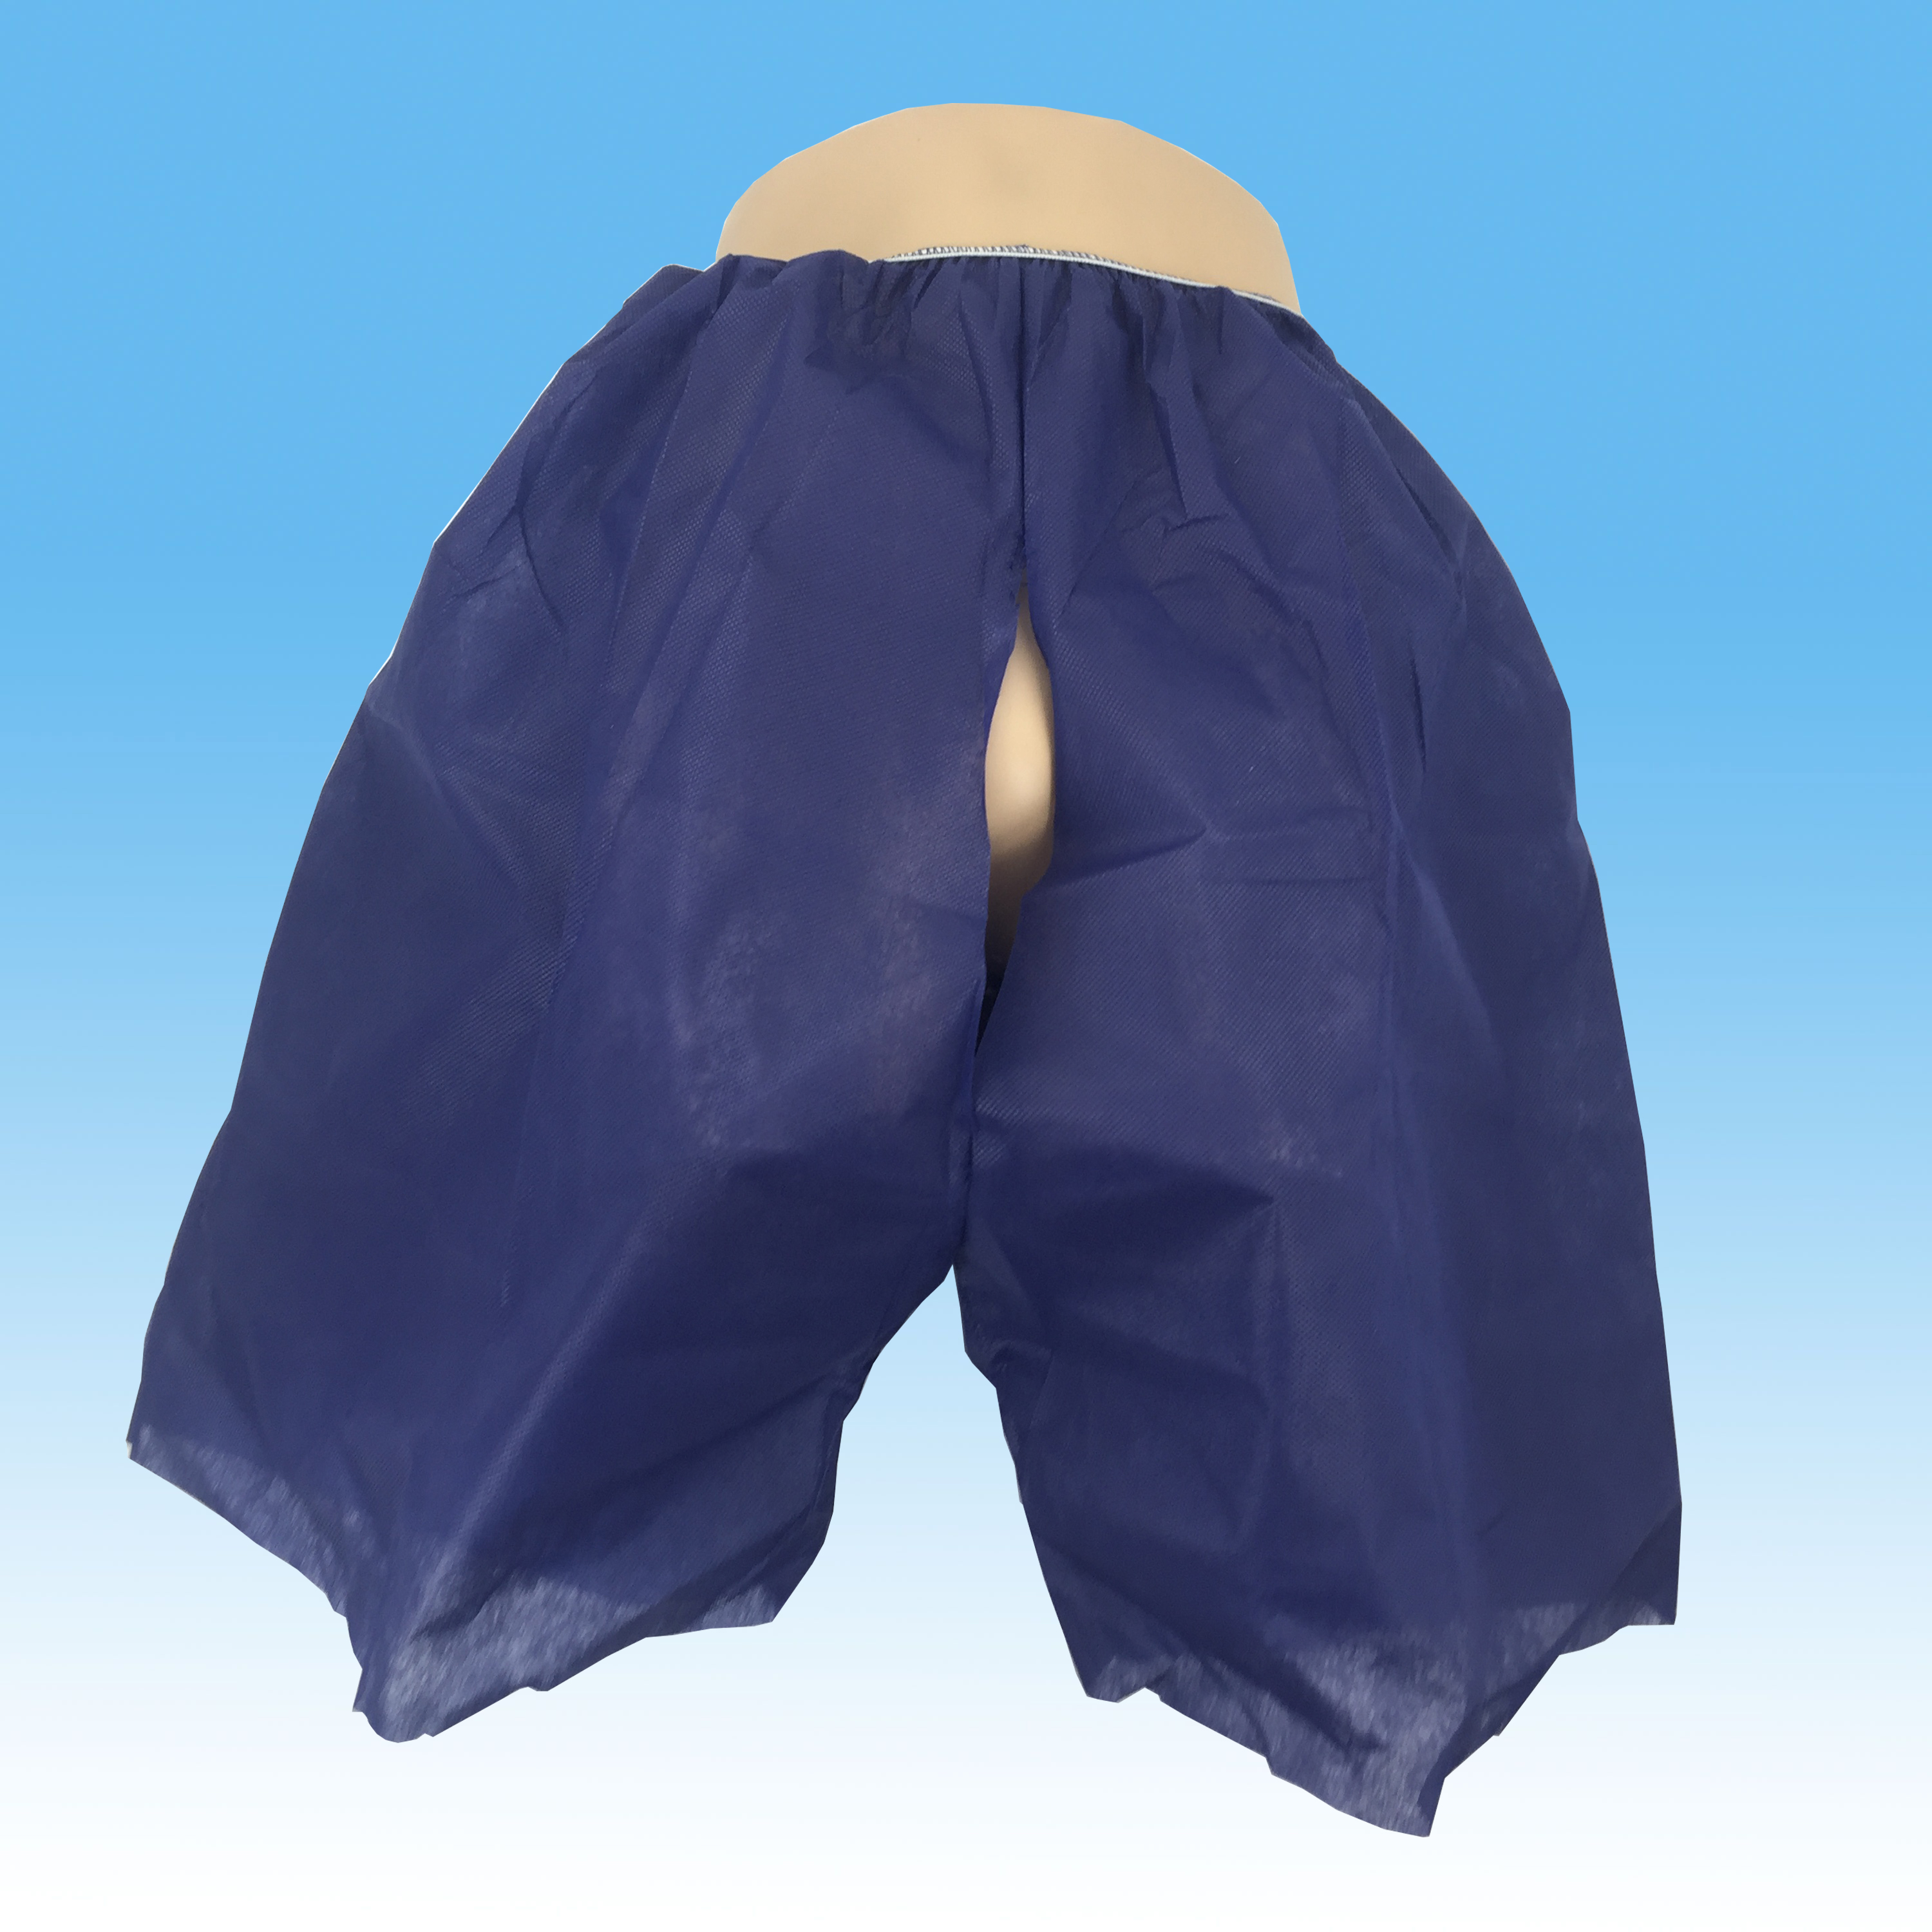 SMS 50g azul oscuro tela no tejida médico colonoscopia paciente examen pantalones cortos ropa interior desechable pantalones para adultos